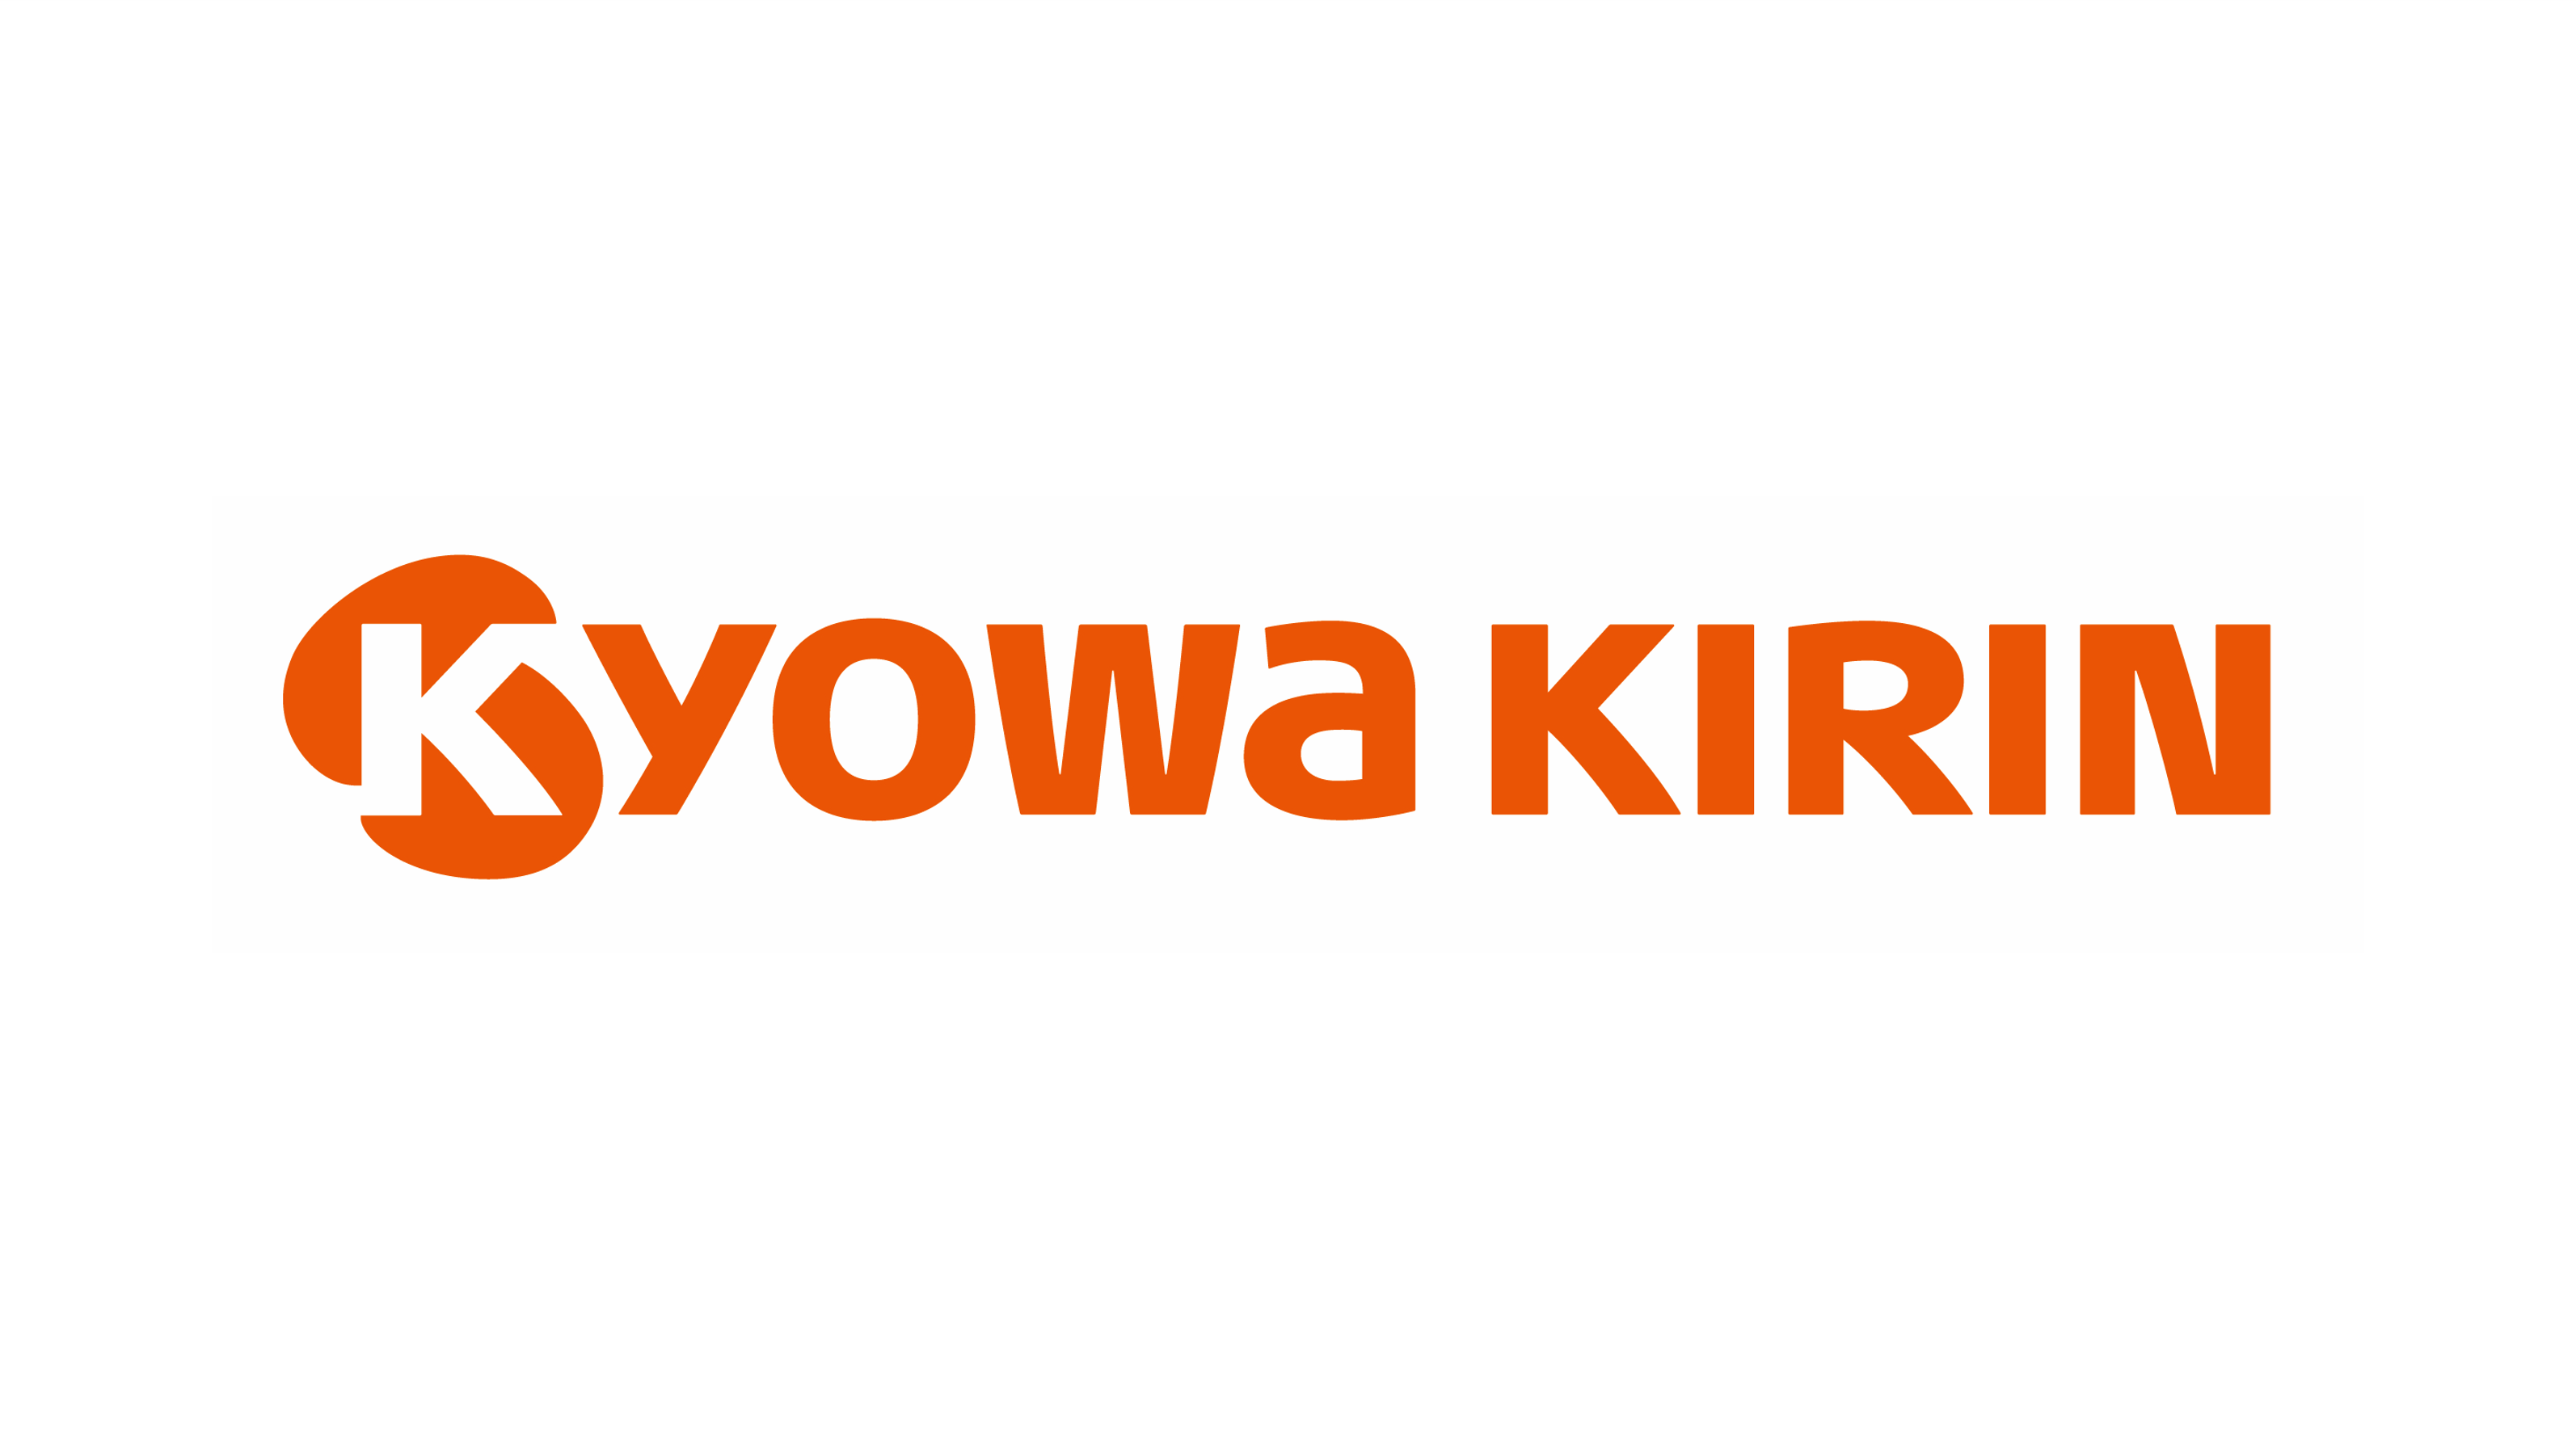 kyowakirin_logo_16_9_764.png